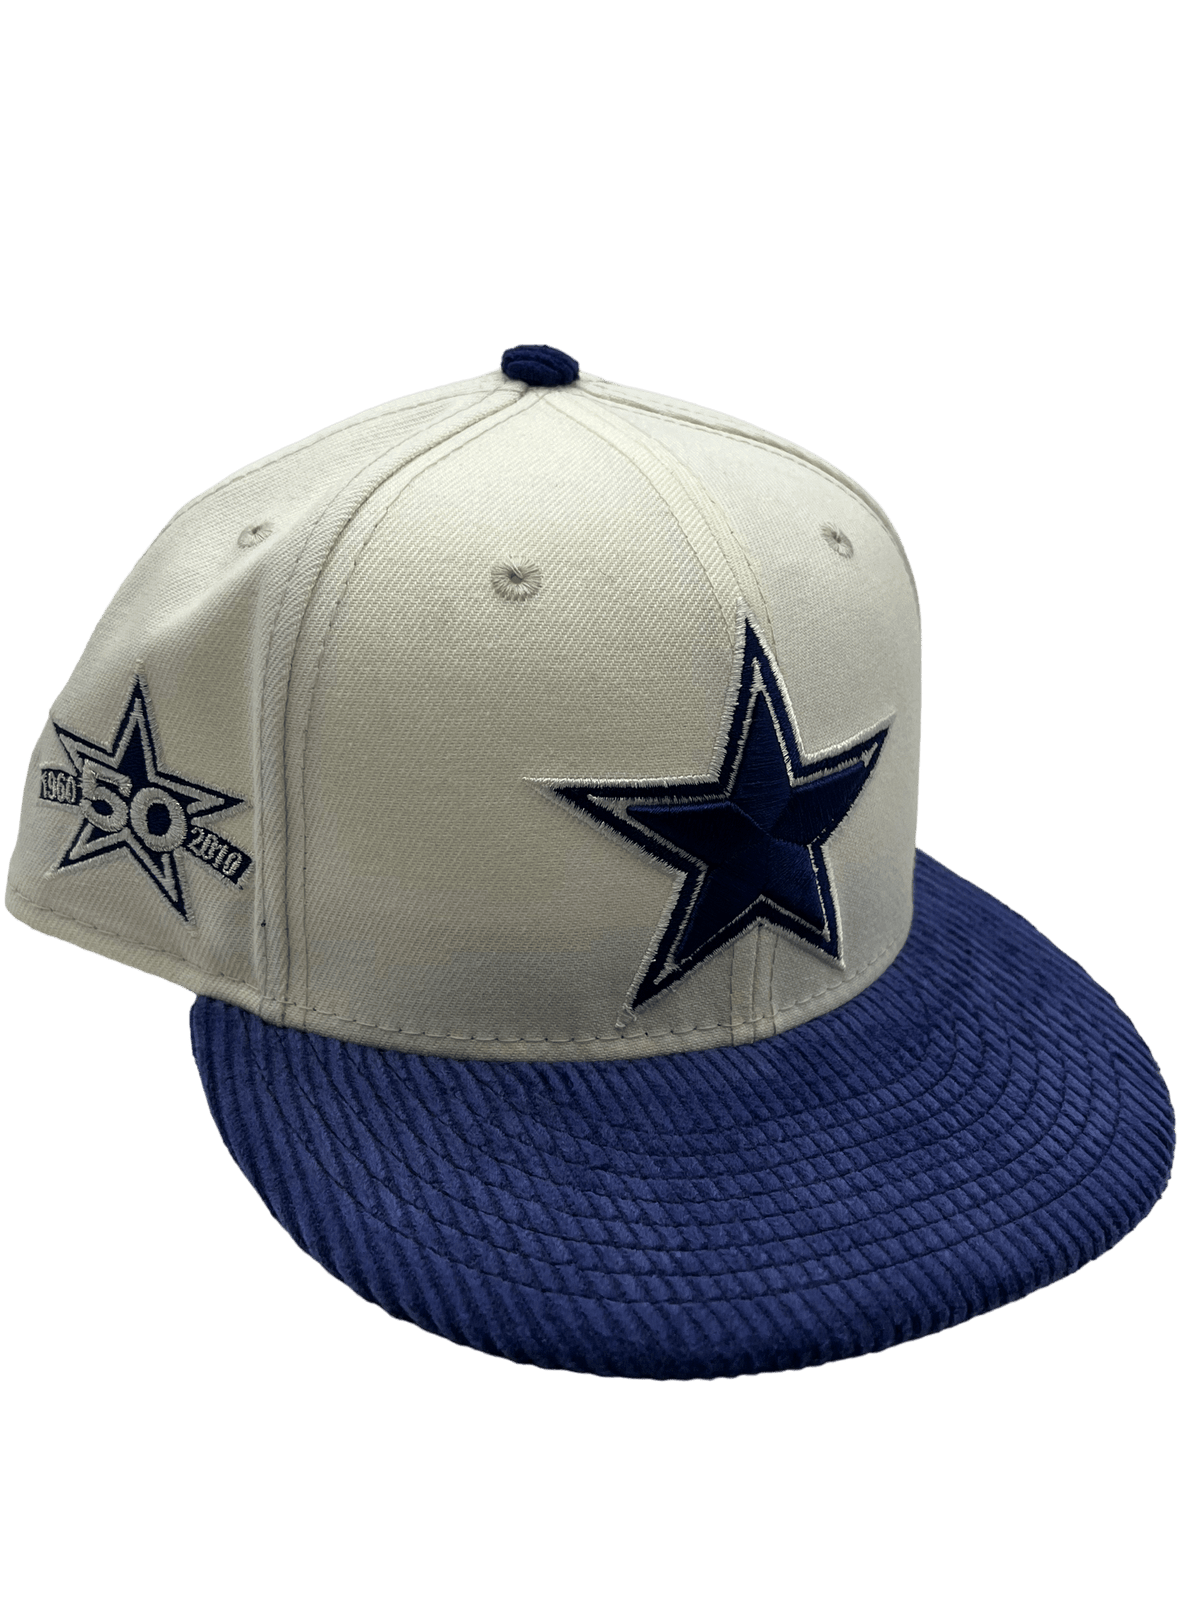 dallas cowboys new era sideline hat